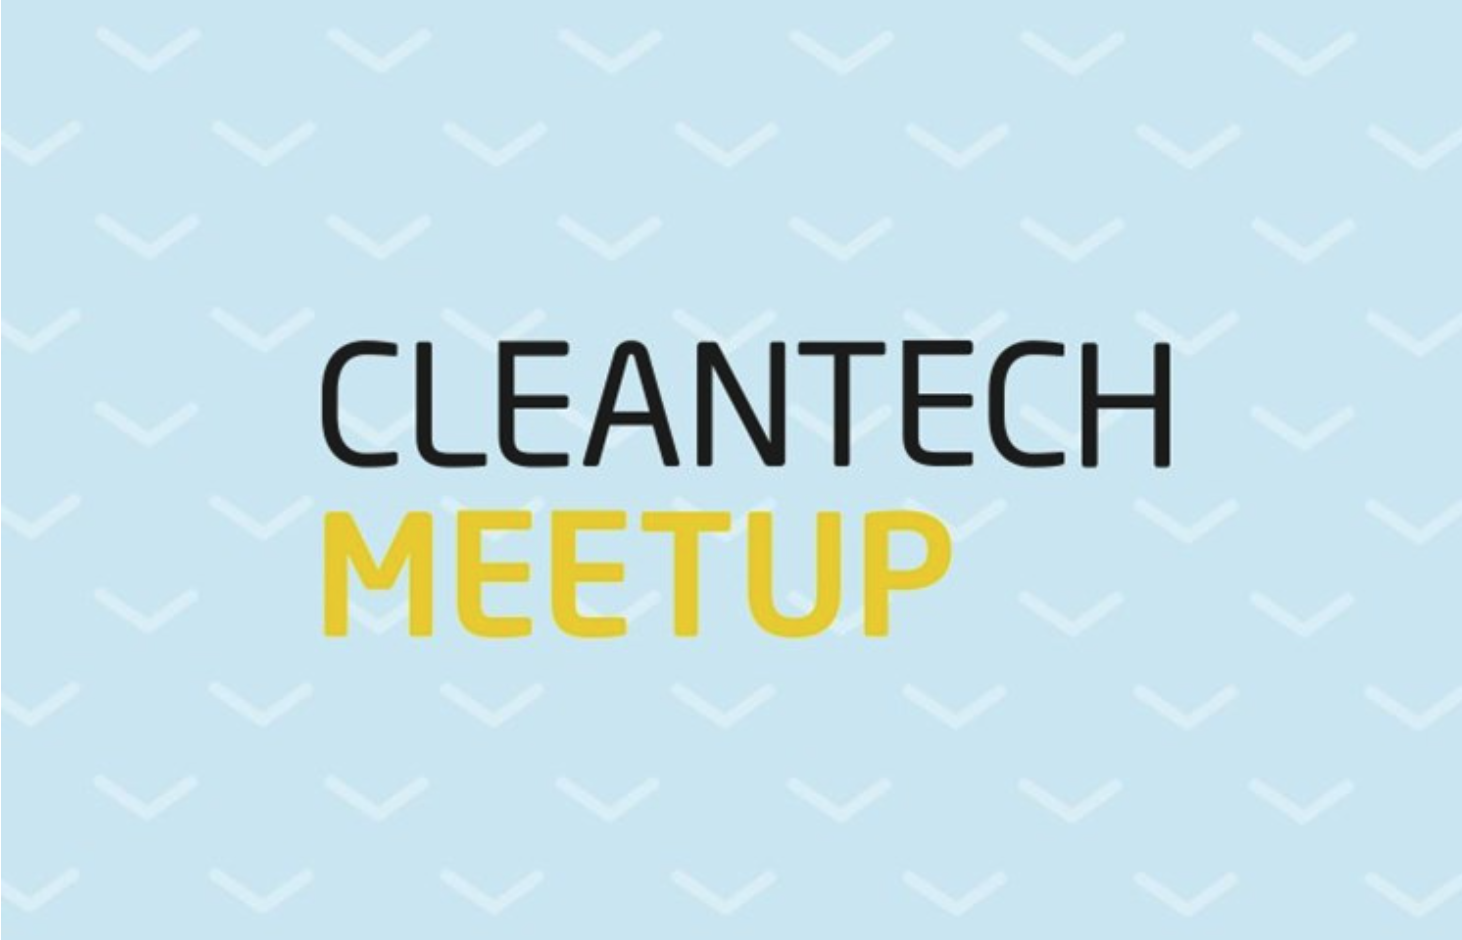 🇸🇪 Exploring Business Opportunities: Cleantech Meetup in Piteå